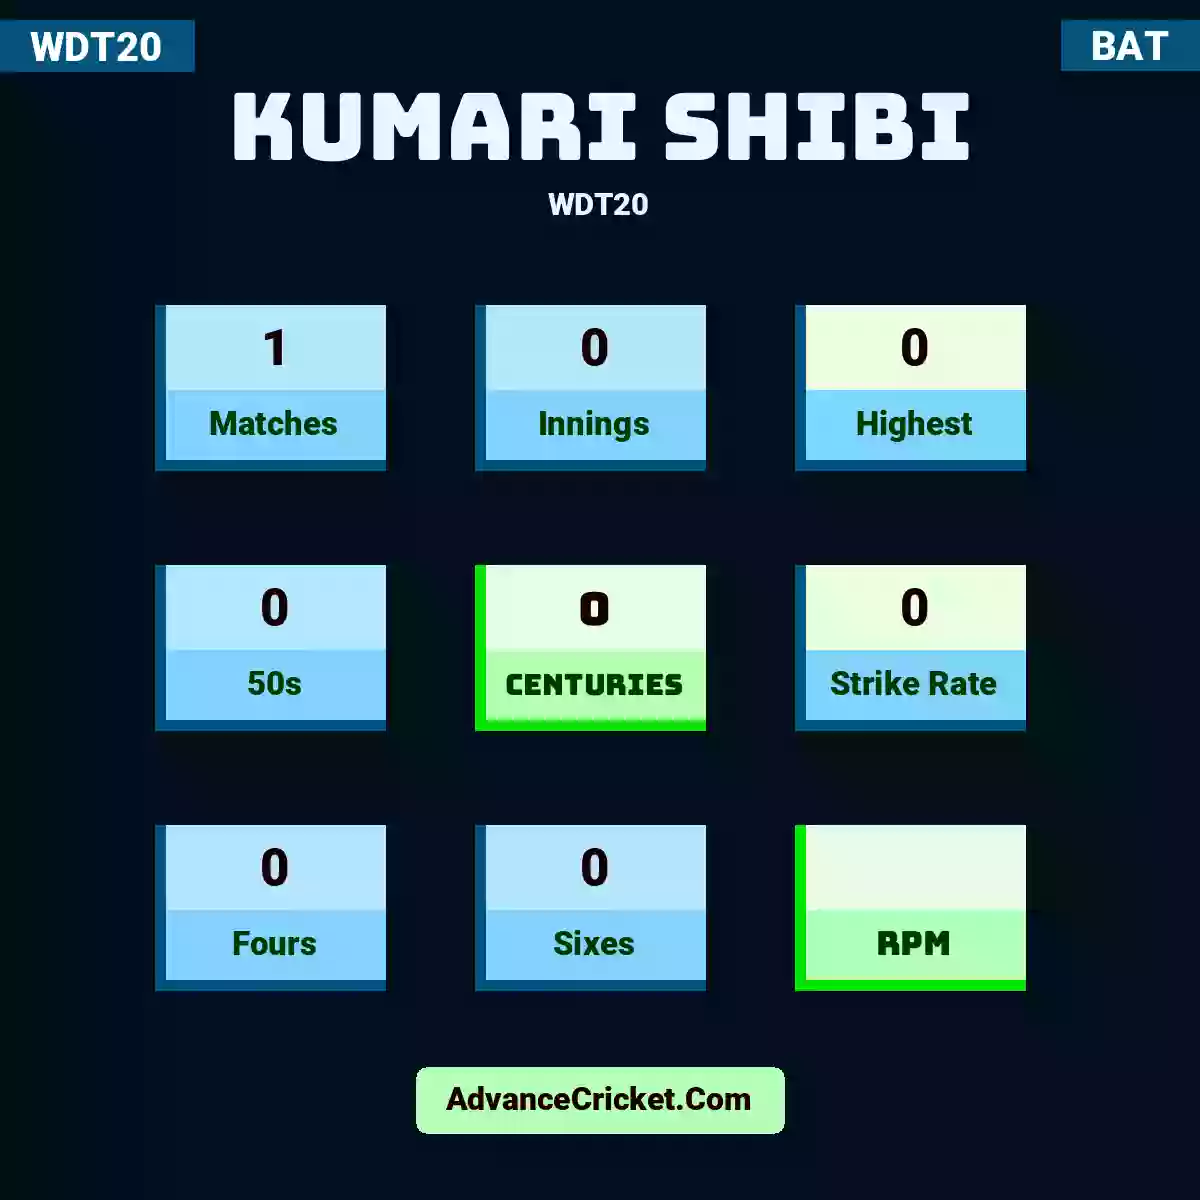 Kumari Shibi WDT20 , Kumari Shibi played 1 matches, scored 0 runs as highest, 0 half-centuries, and 0 centuries, with a strike rate of 0. K.Shibi hit 0 fours and 0 sixes.